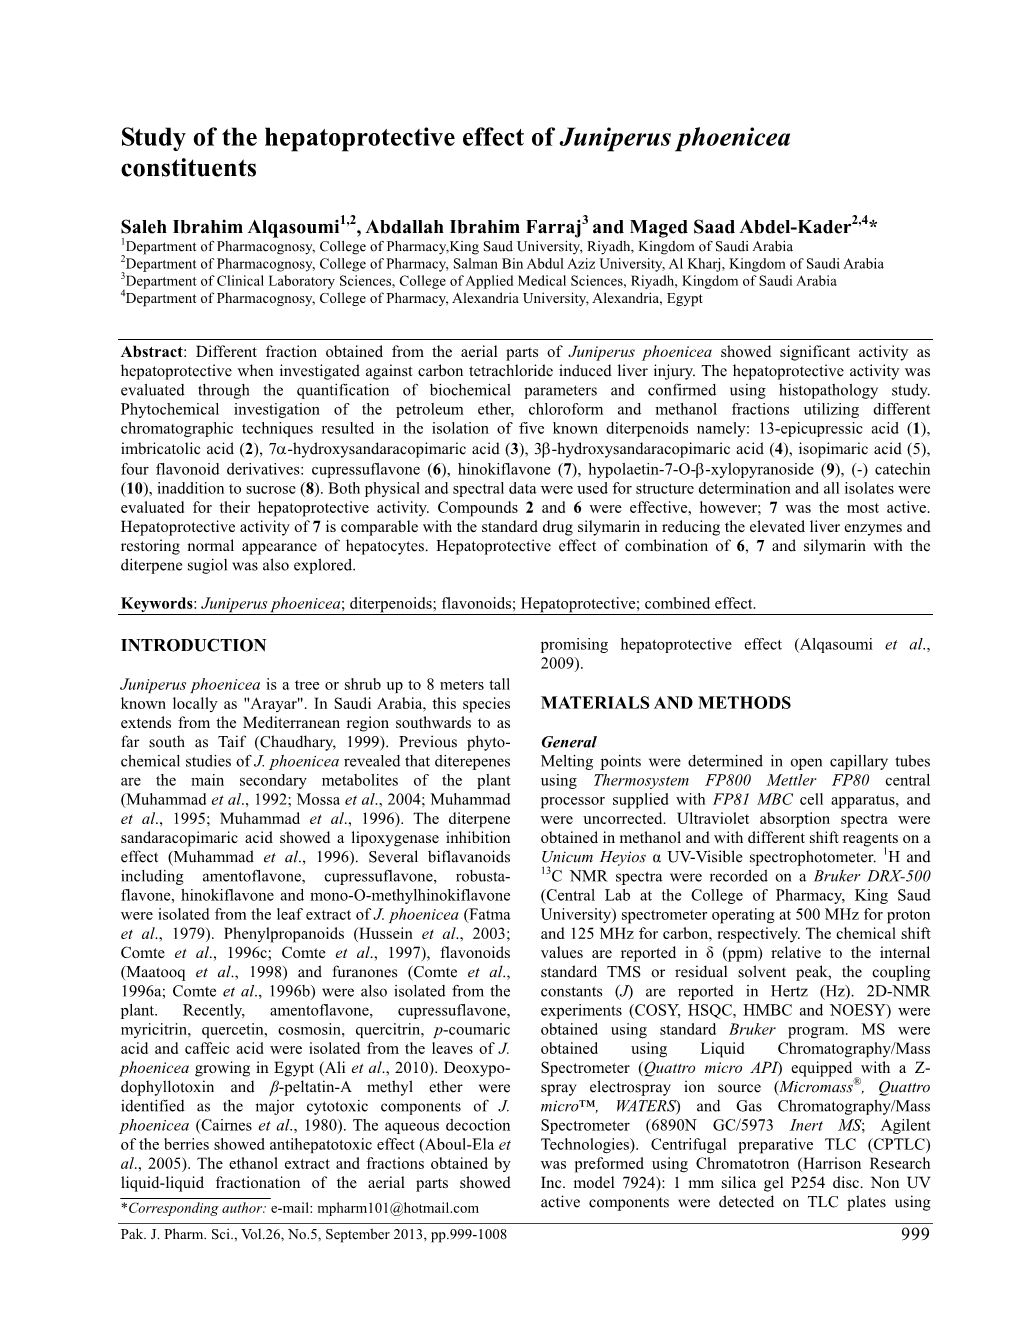 Study of the Hepatoprotective Effect of Juniperus Phoenicea Constituents